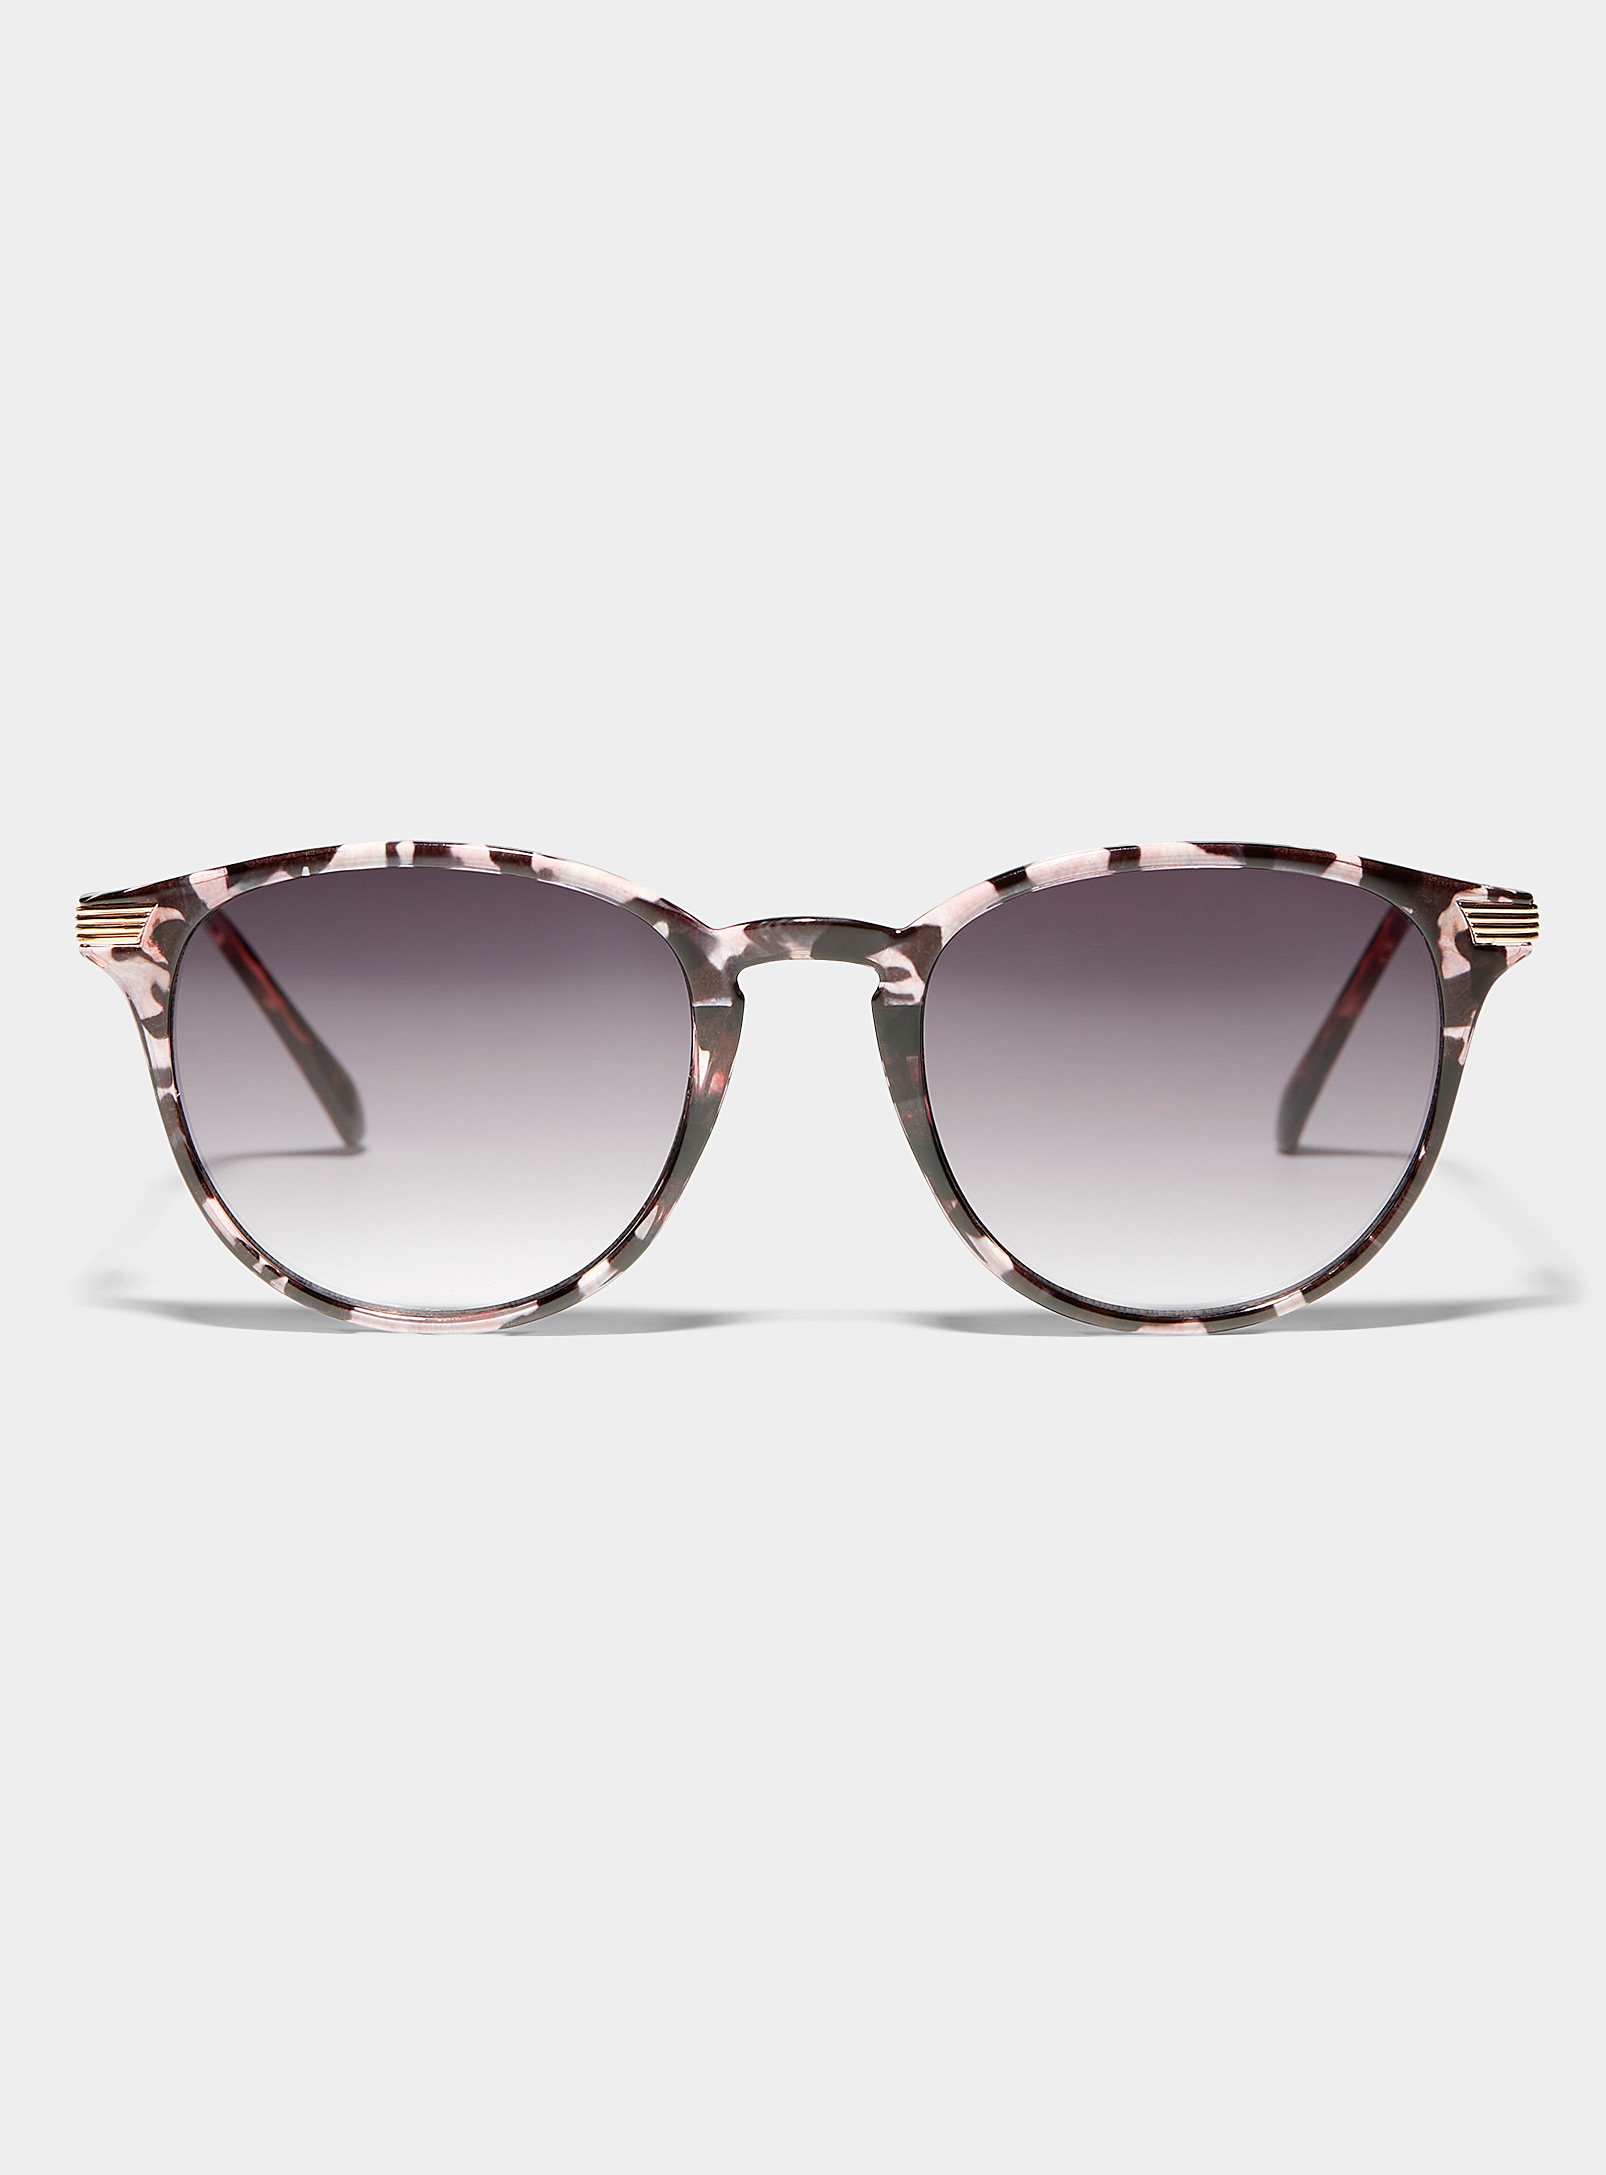 Simons - Women's Maze round sunglasses